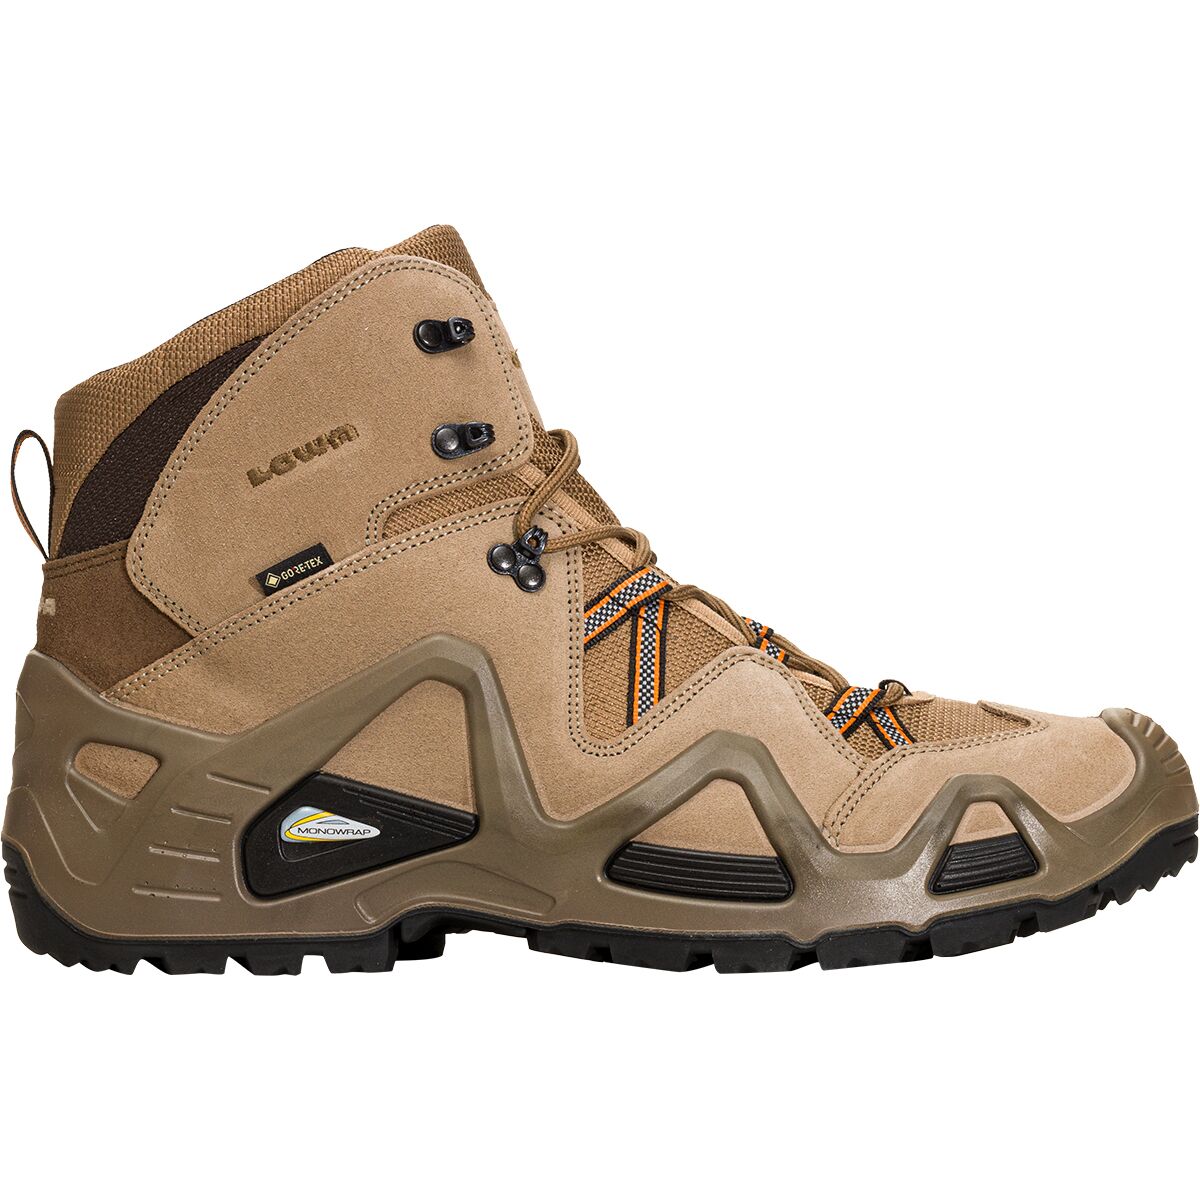 Lowa Zephyr GTX Mid Hiking Boot - Men's